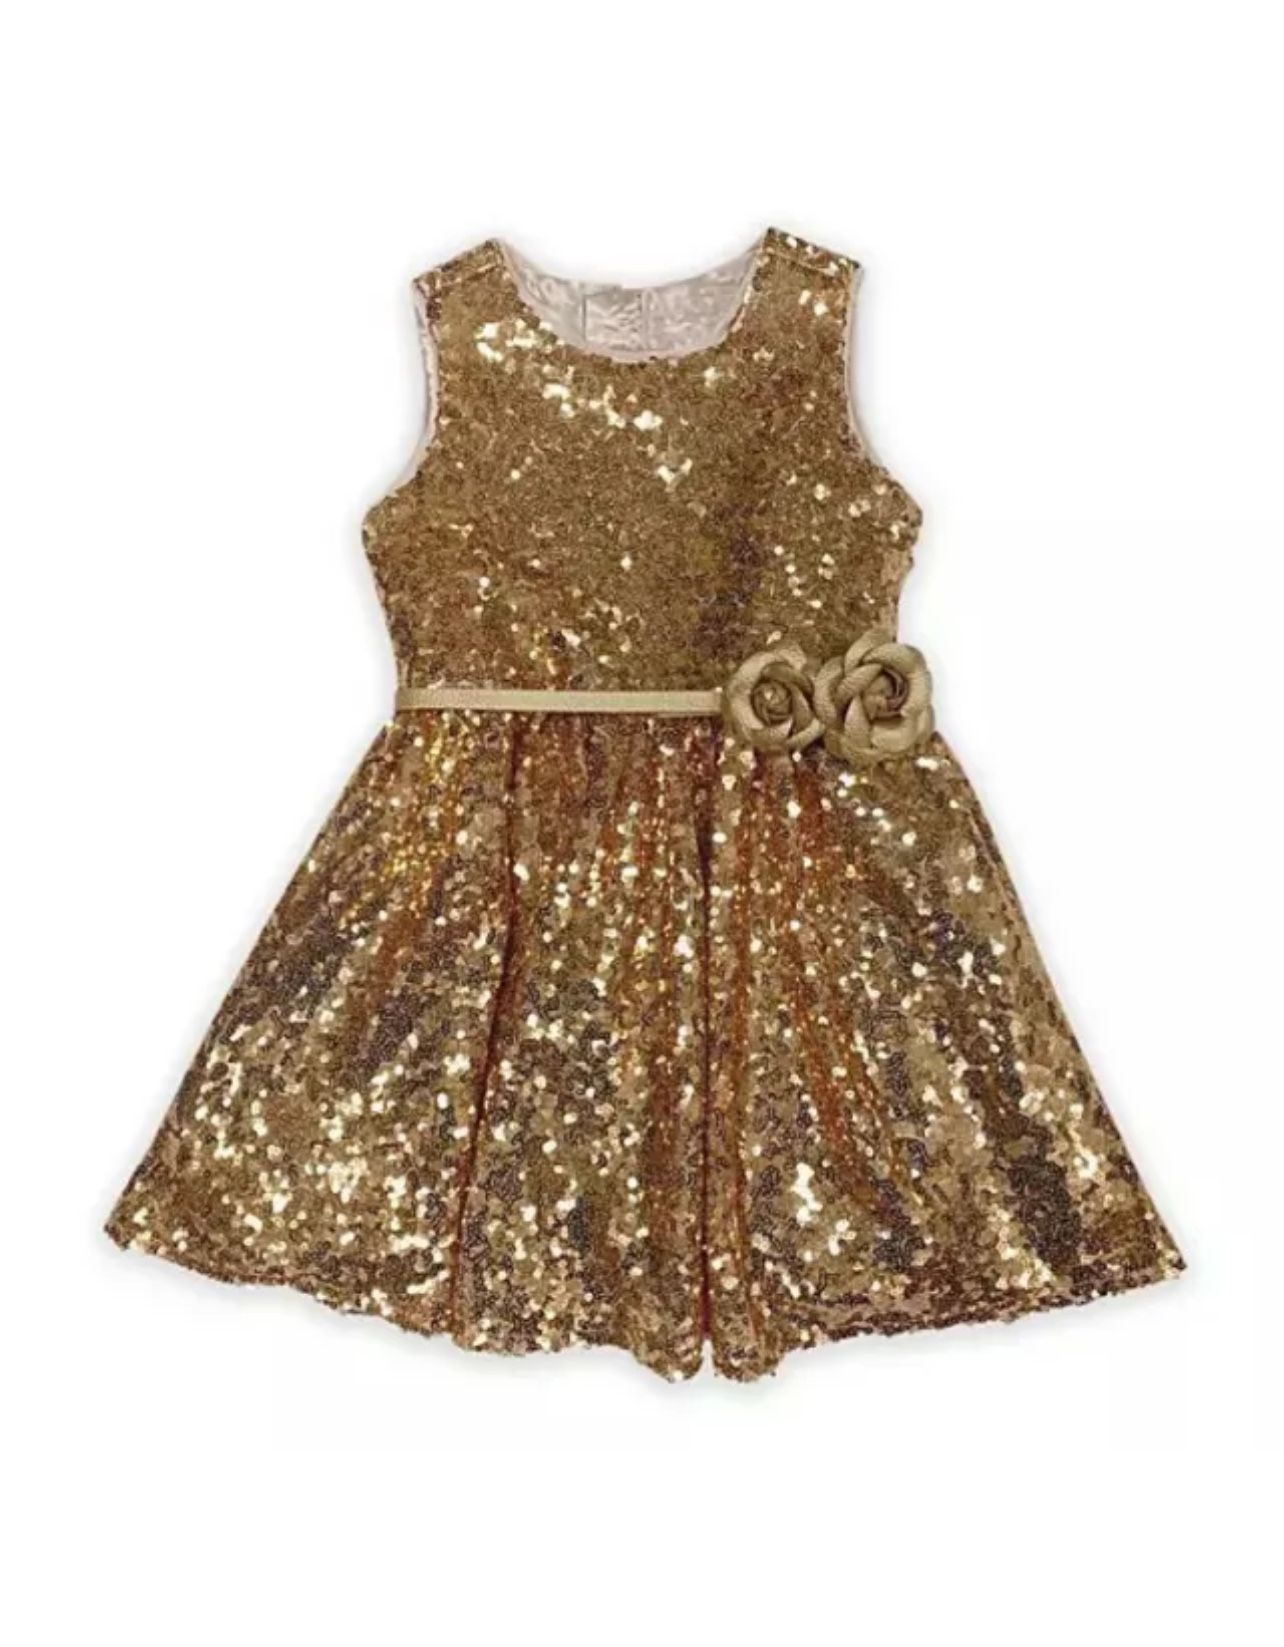 Disney Sequin Gold Belle Dress W/ Flower Belt and Tulle Underskirt size 4/5